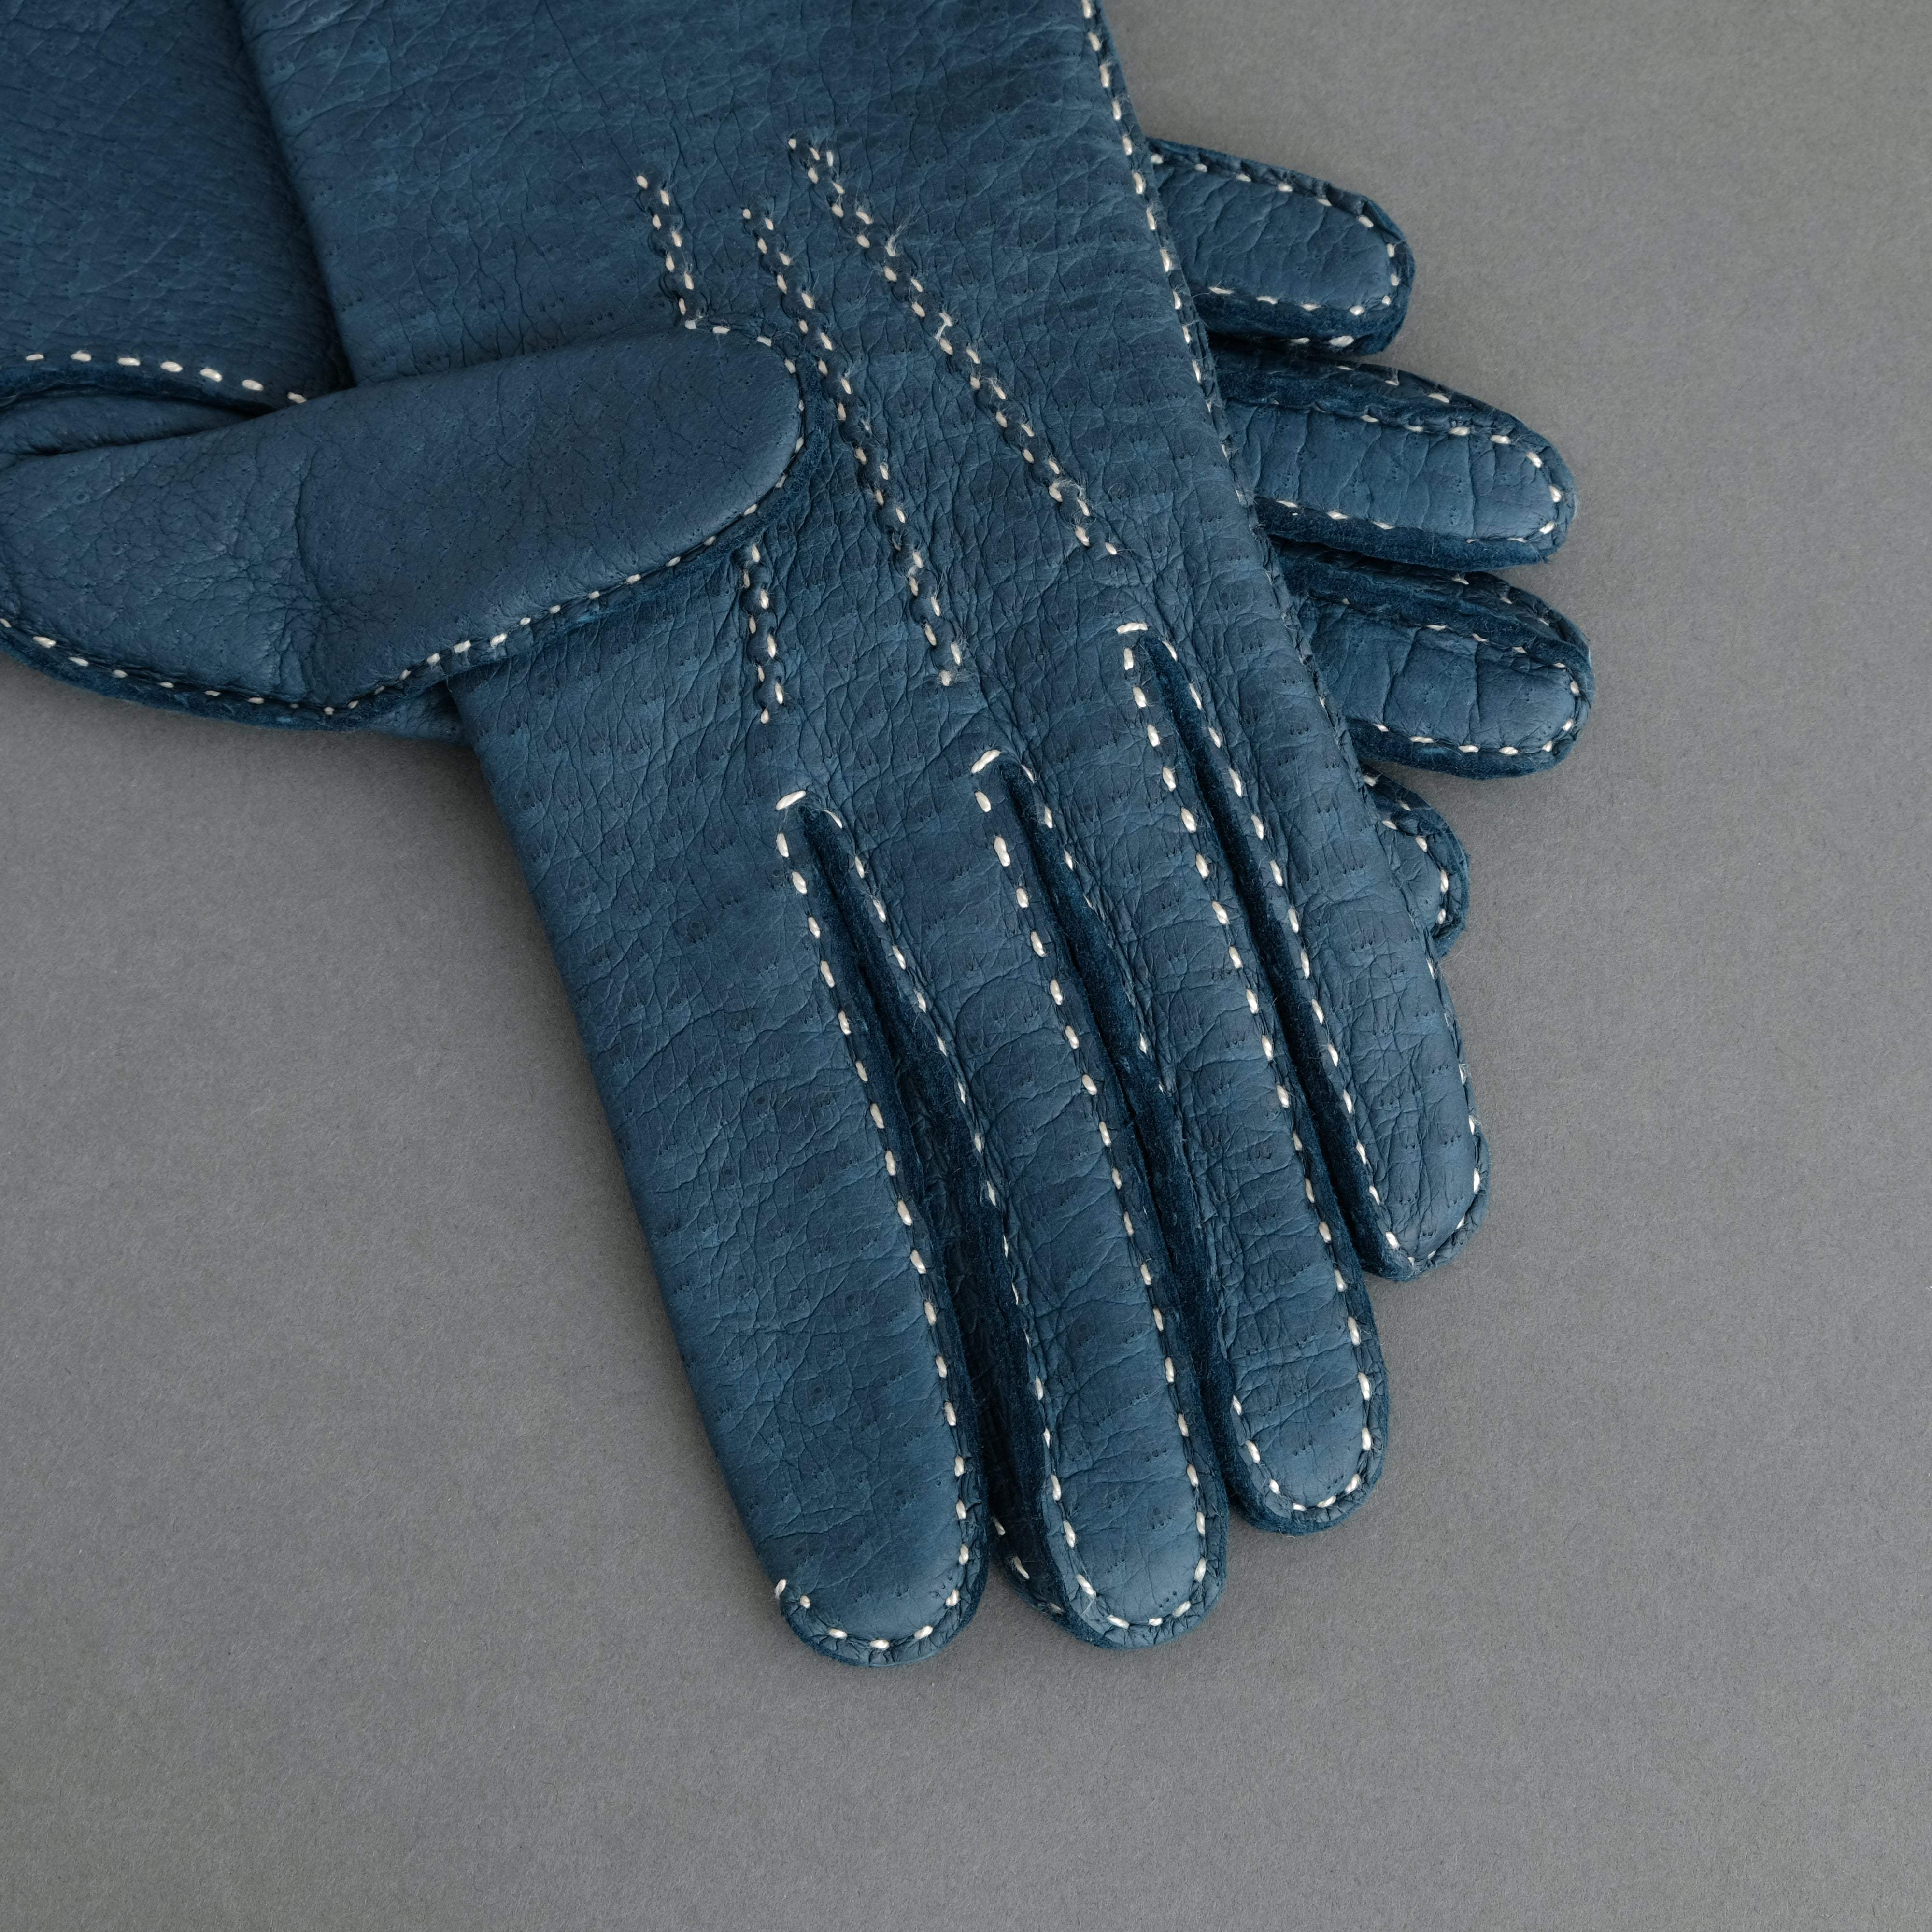 Gentlemen's Gloves from Denim Blue Peccary Lined with Cashmere - TR Handschuhe Wien - Thomas Riemer Handmade Gloves